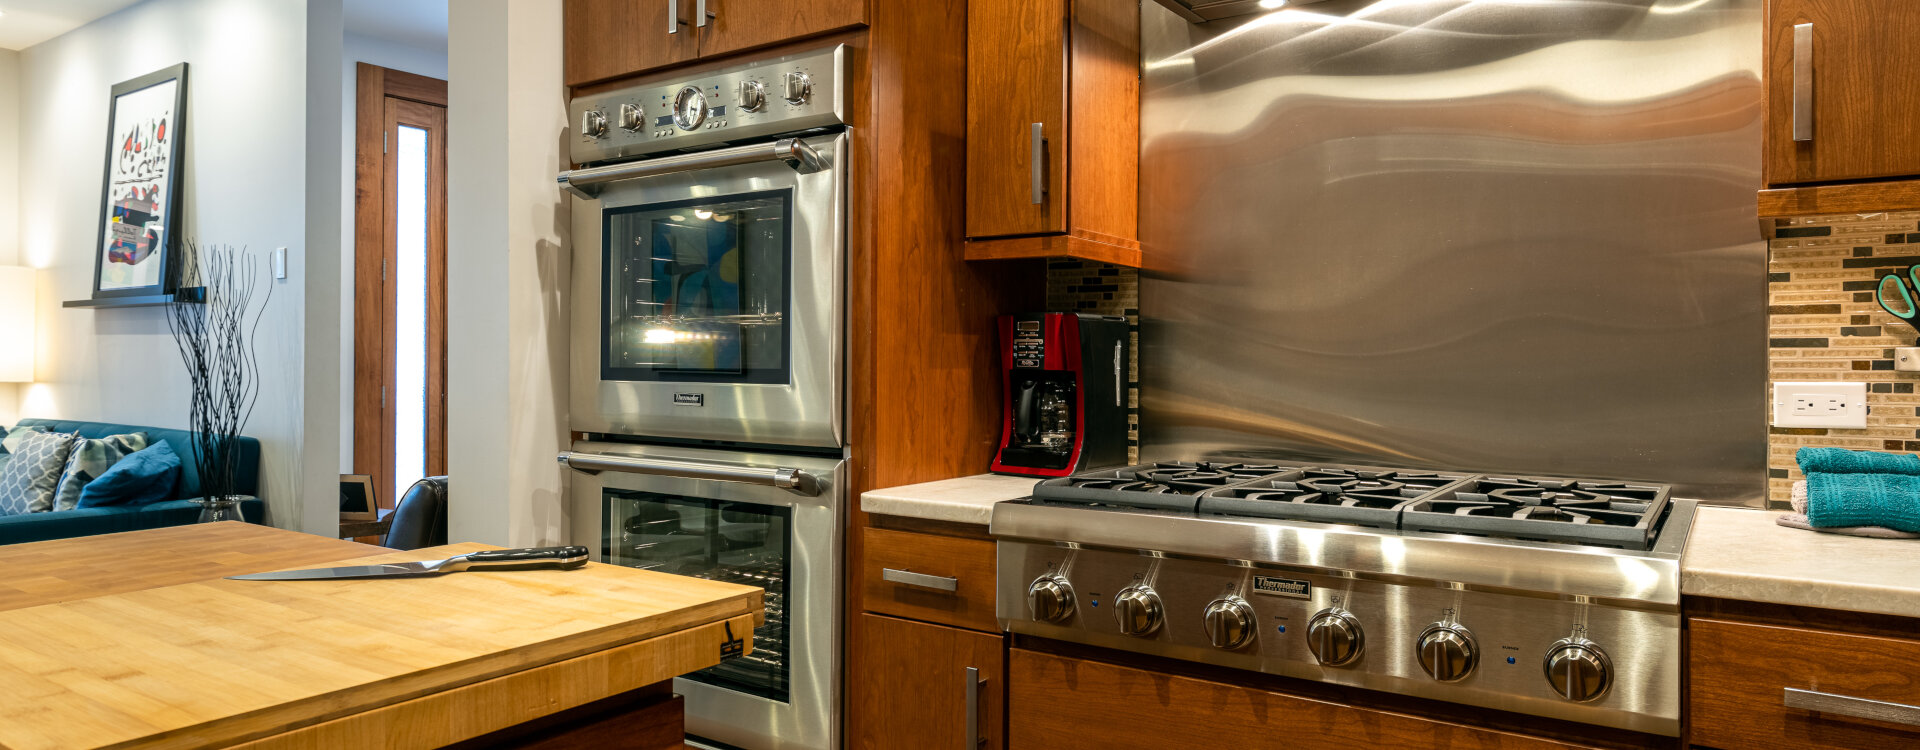 2.07-telluride-local-luxury-kitchen-stove-oven